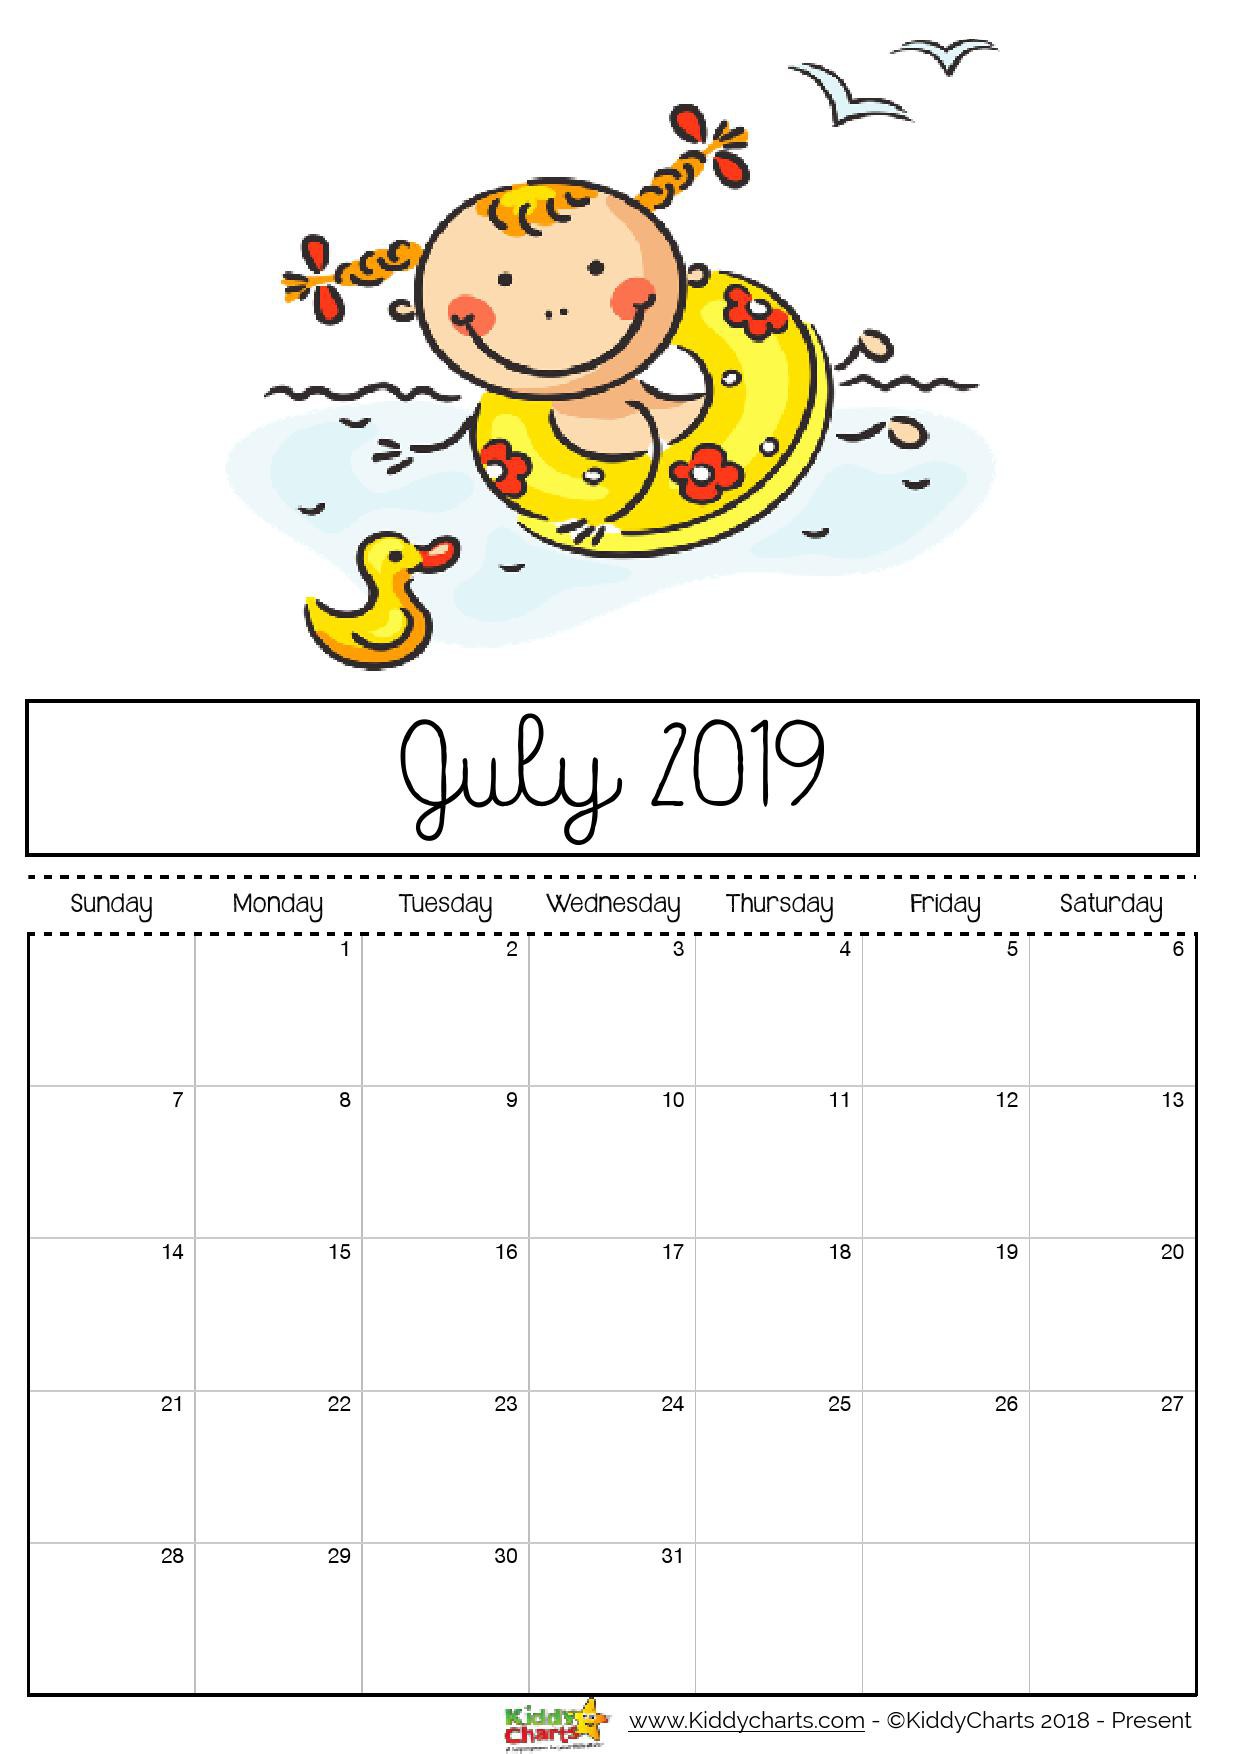 free printable 2019 calendar print yours here kiddycharts